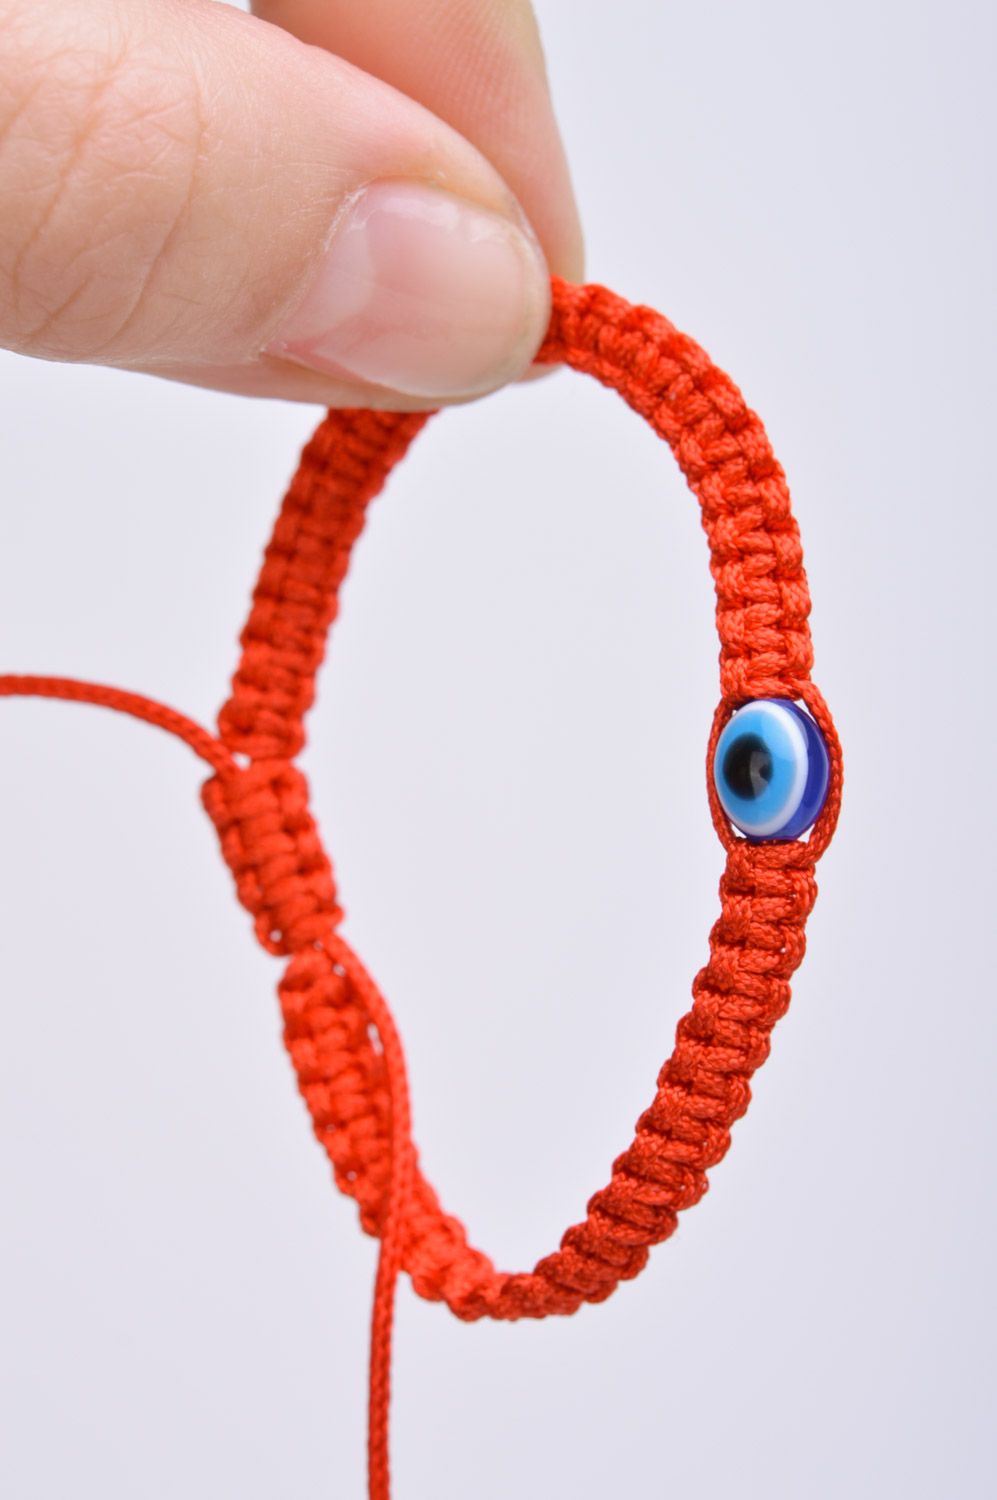 Braided handmade red wrist bracelet made of threads against the evil eye photo 3